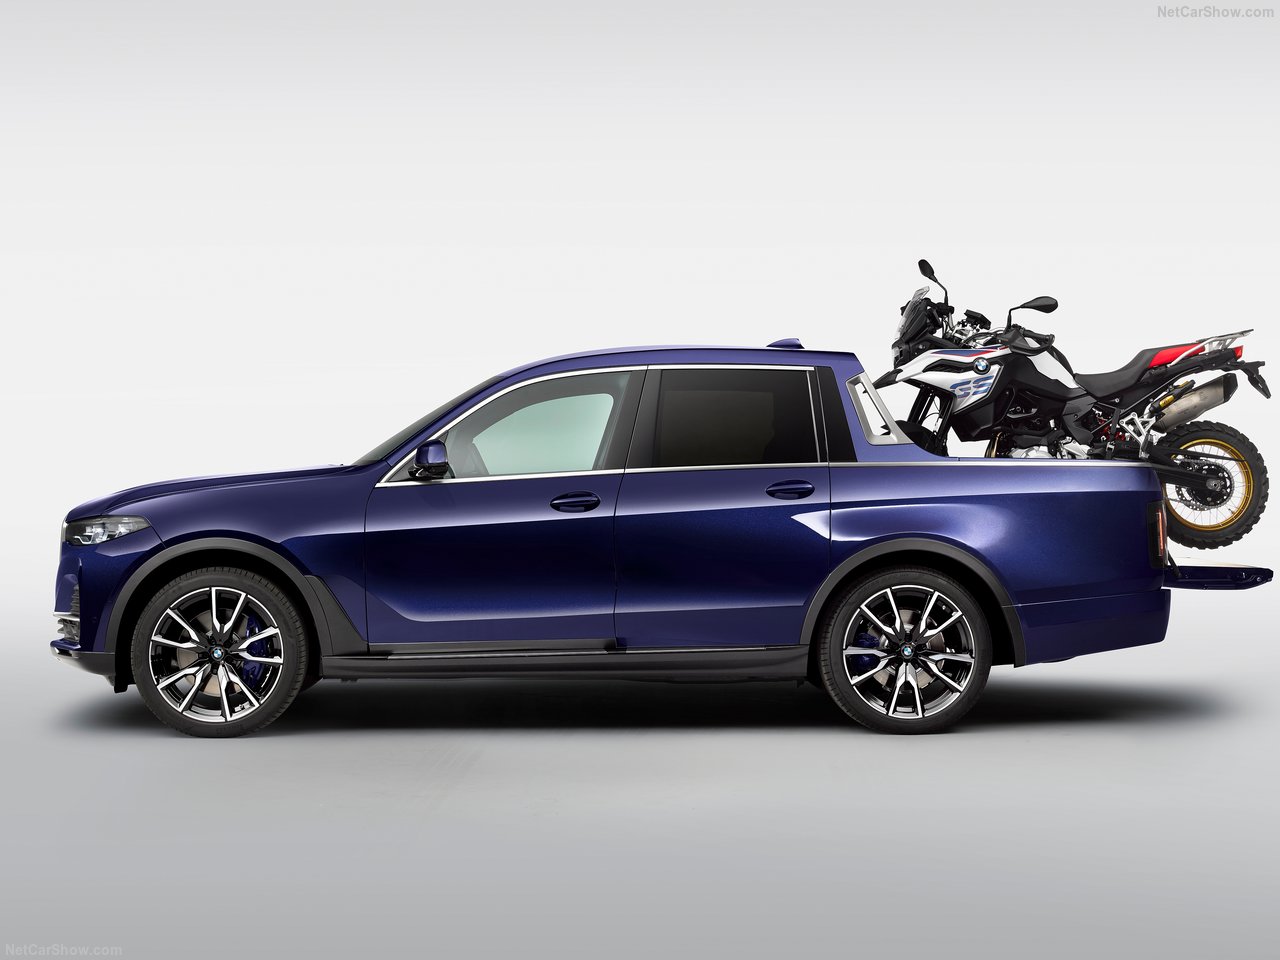 BMW’dan X7 Pick-up! BMW X7 Pick-up’ın özellikleri neler?